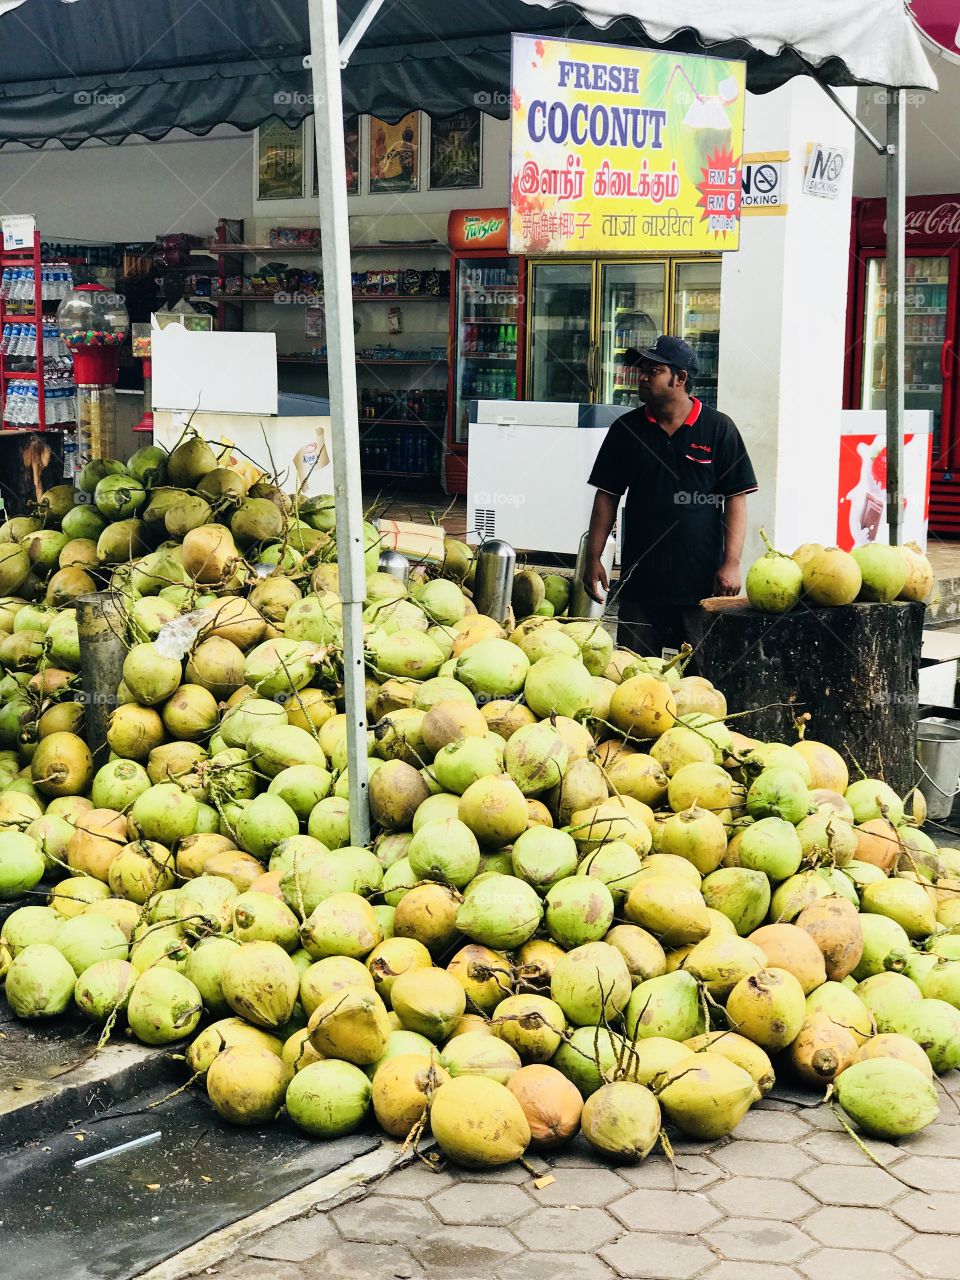 Coconut market